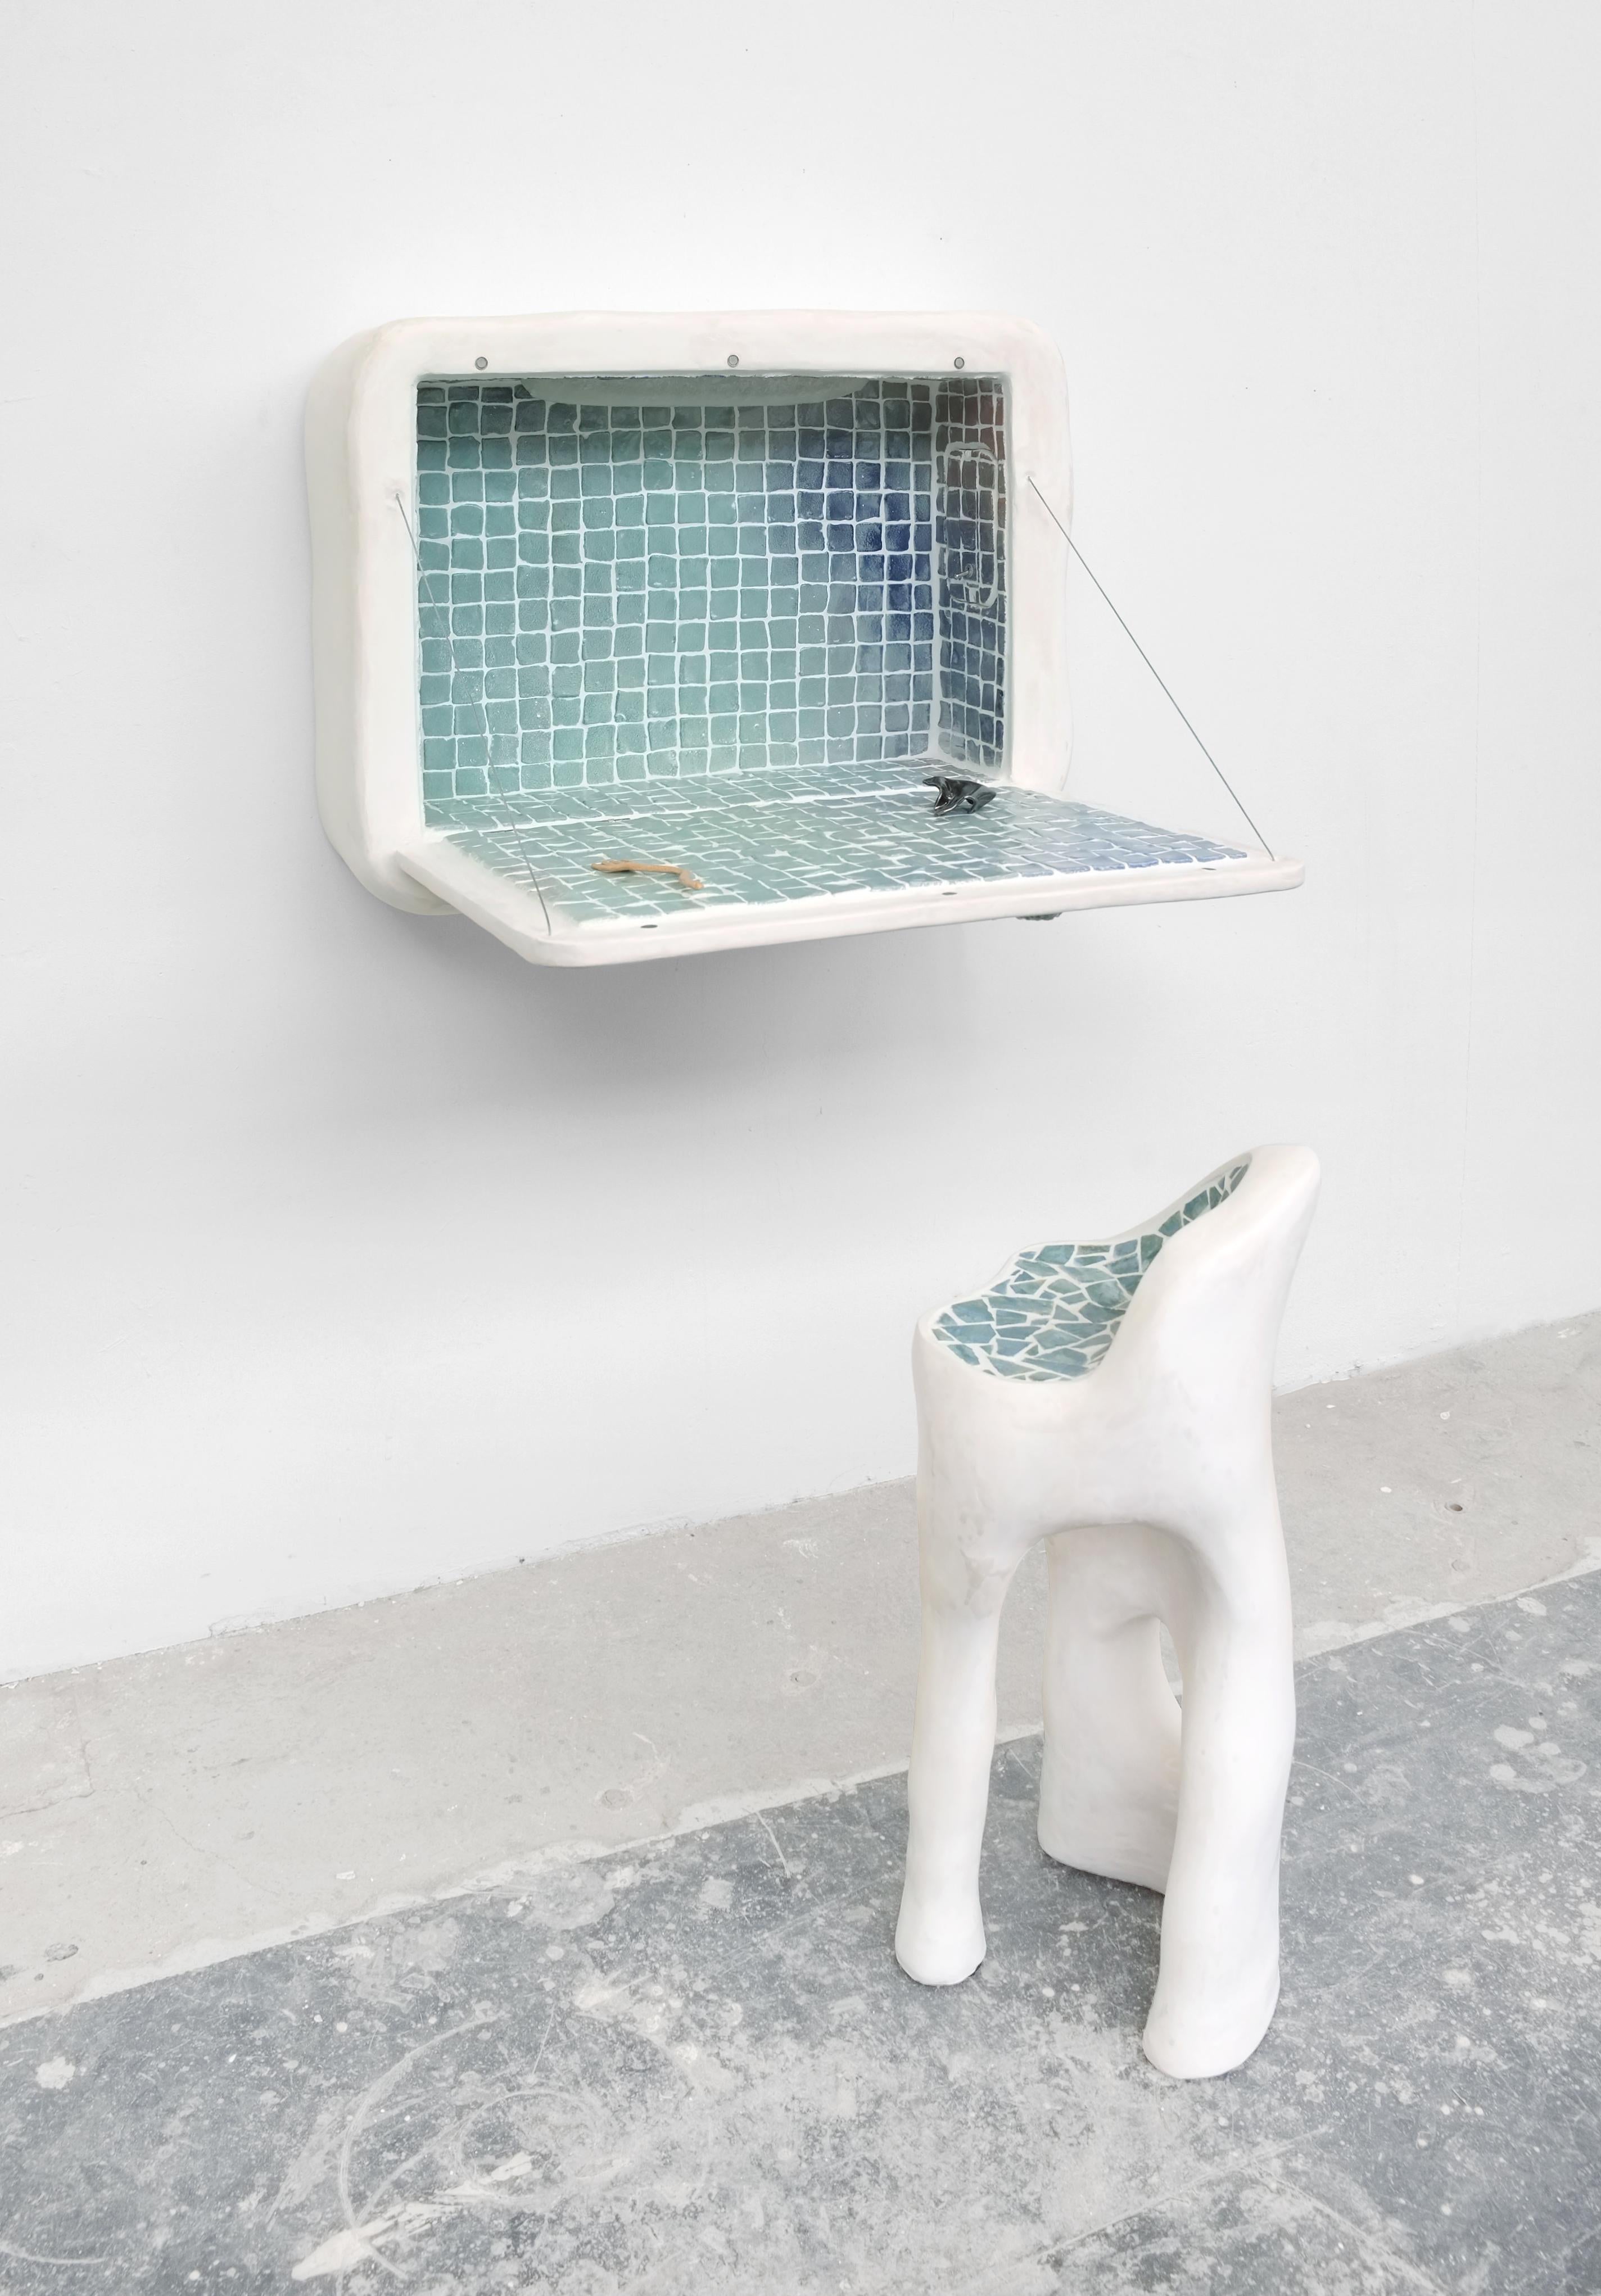 French Côme Clérino Contemporary Ceramic Tiled Wall Desk Model 